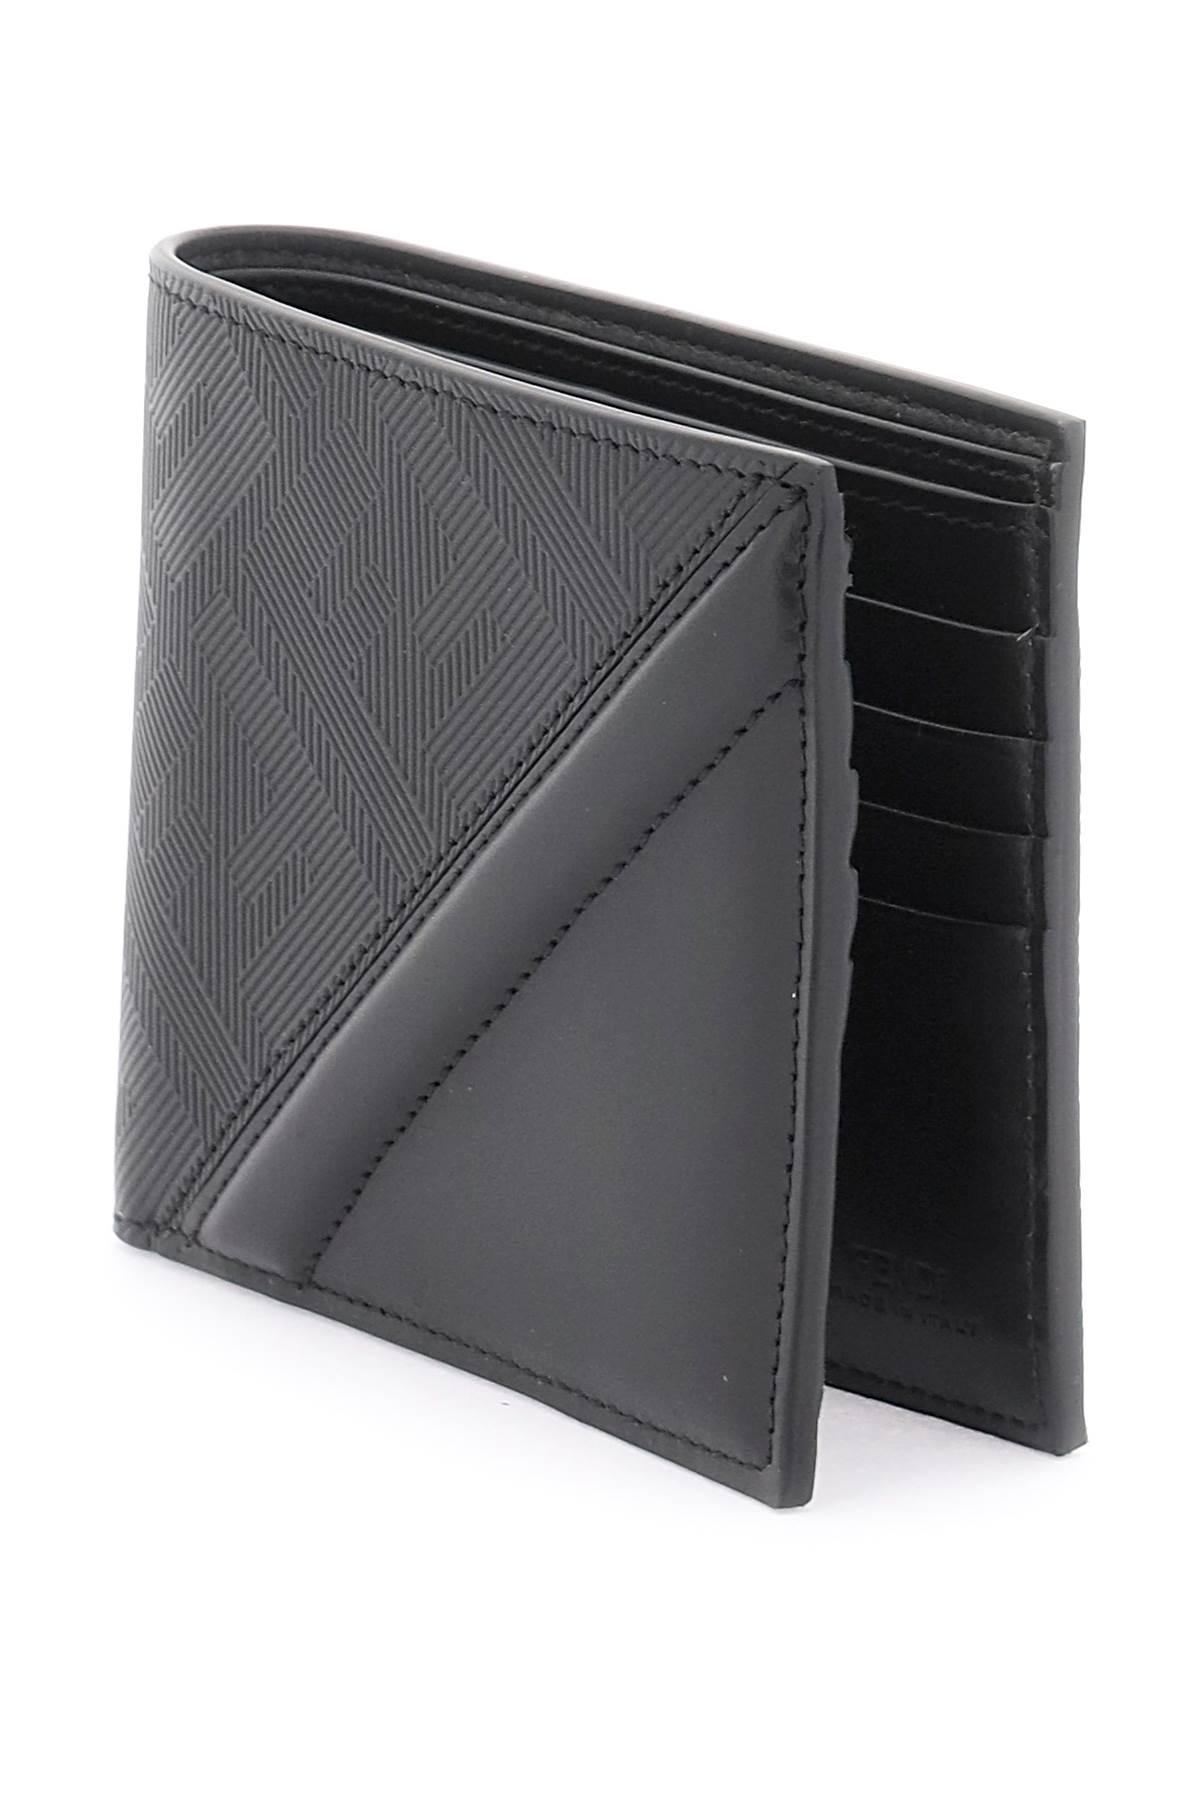 Fendi Shadow Wallet Leather Black